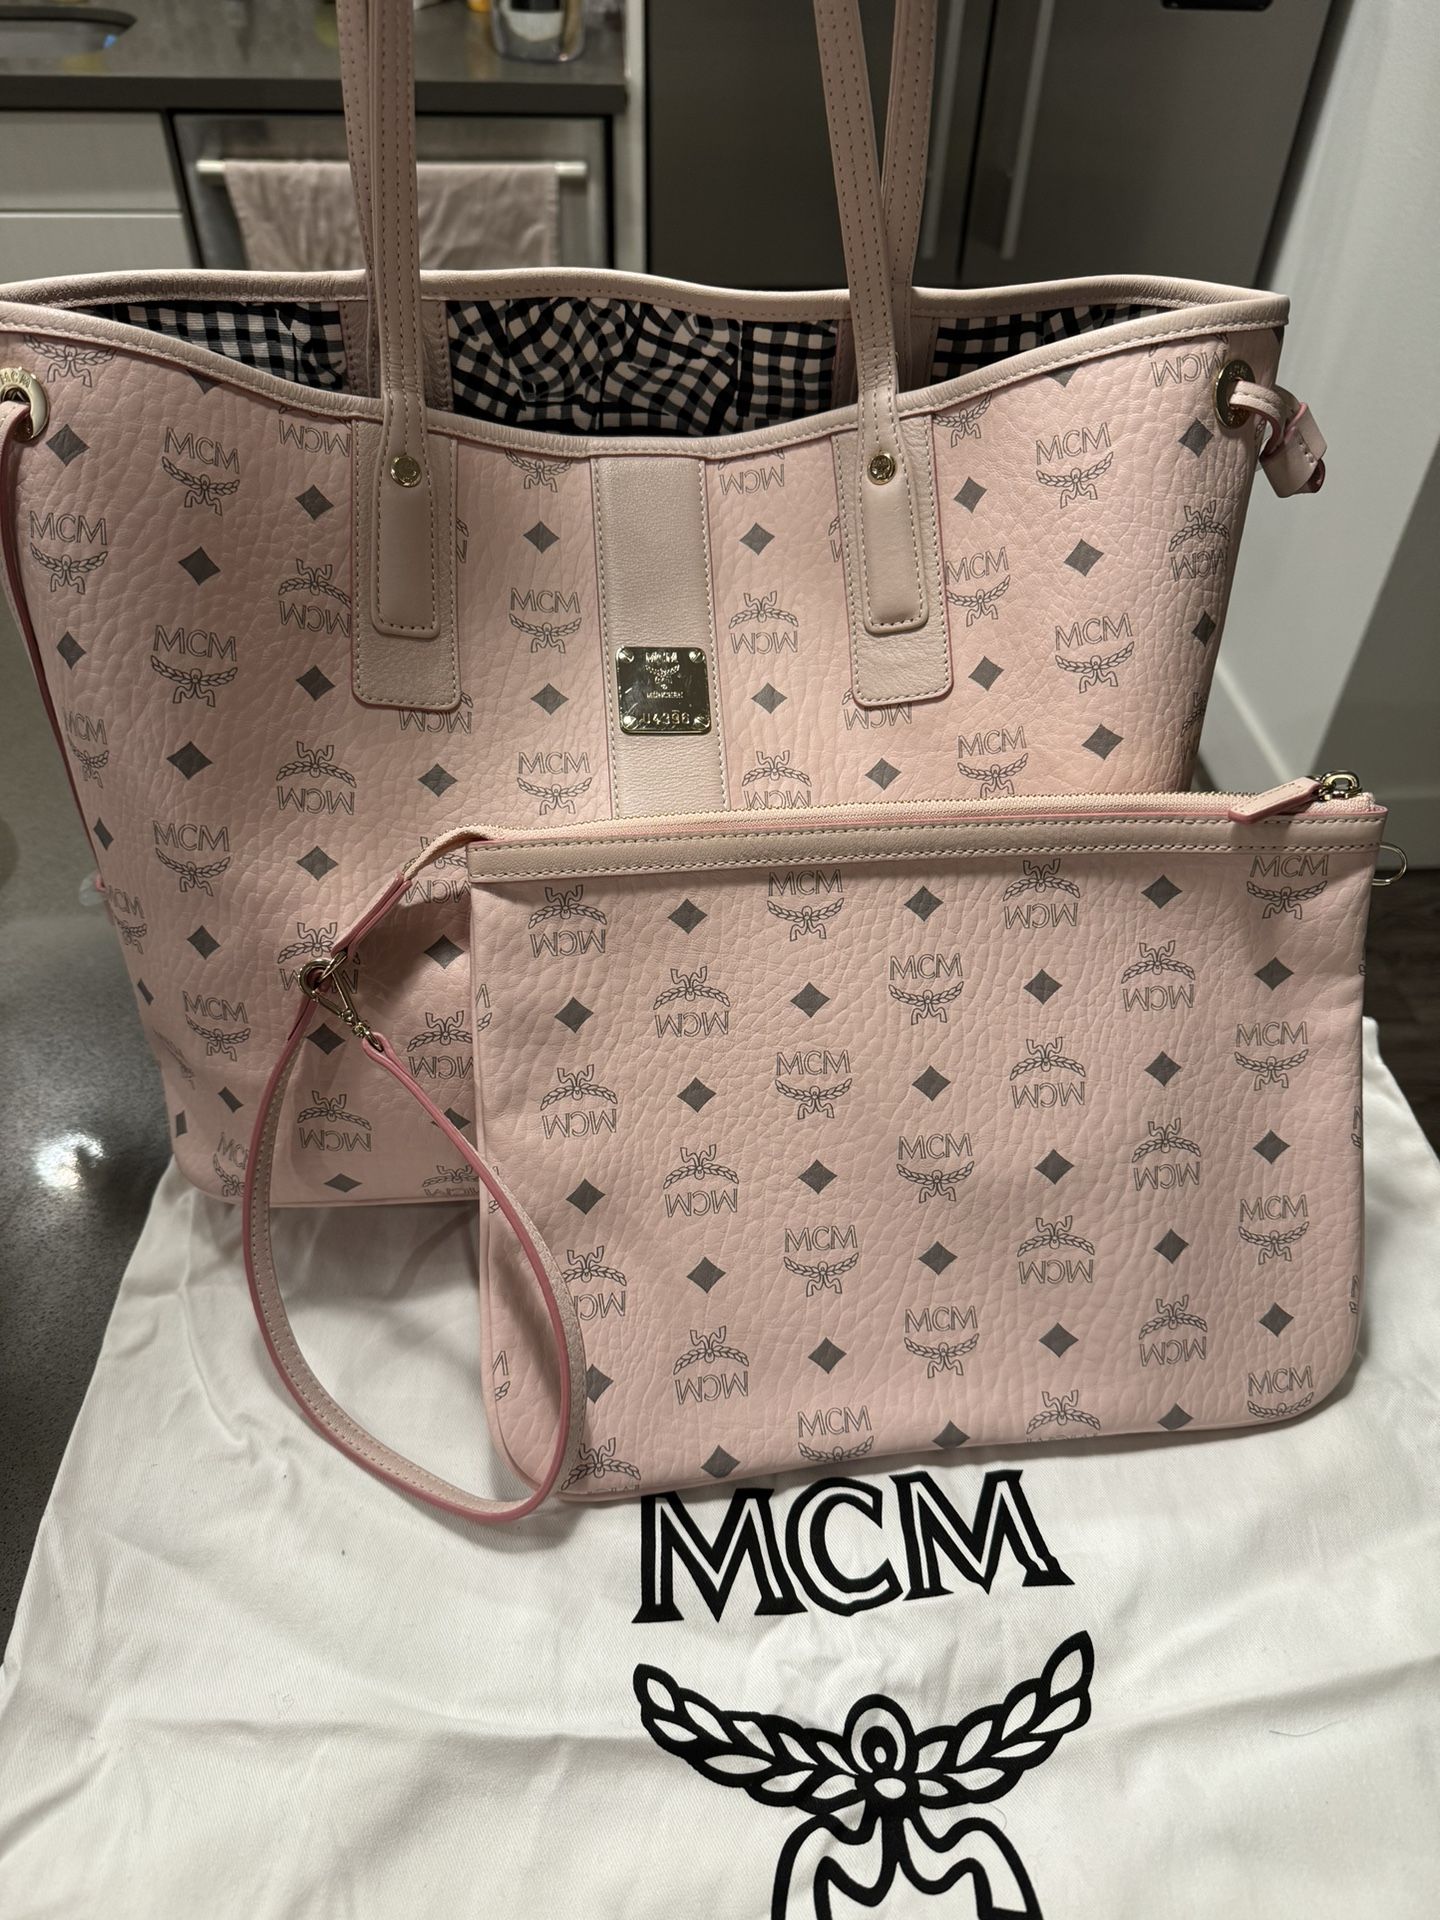 MCM Purse/Bag